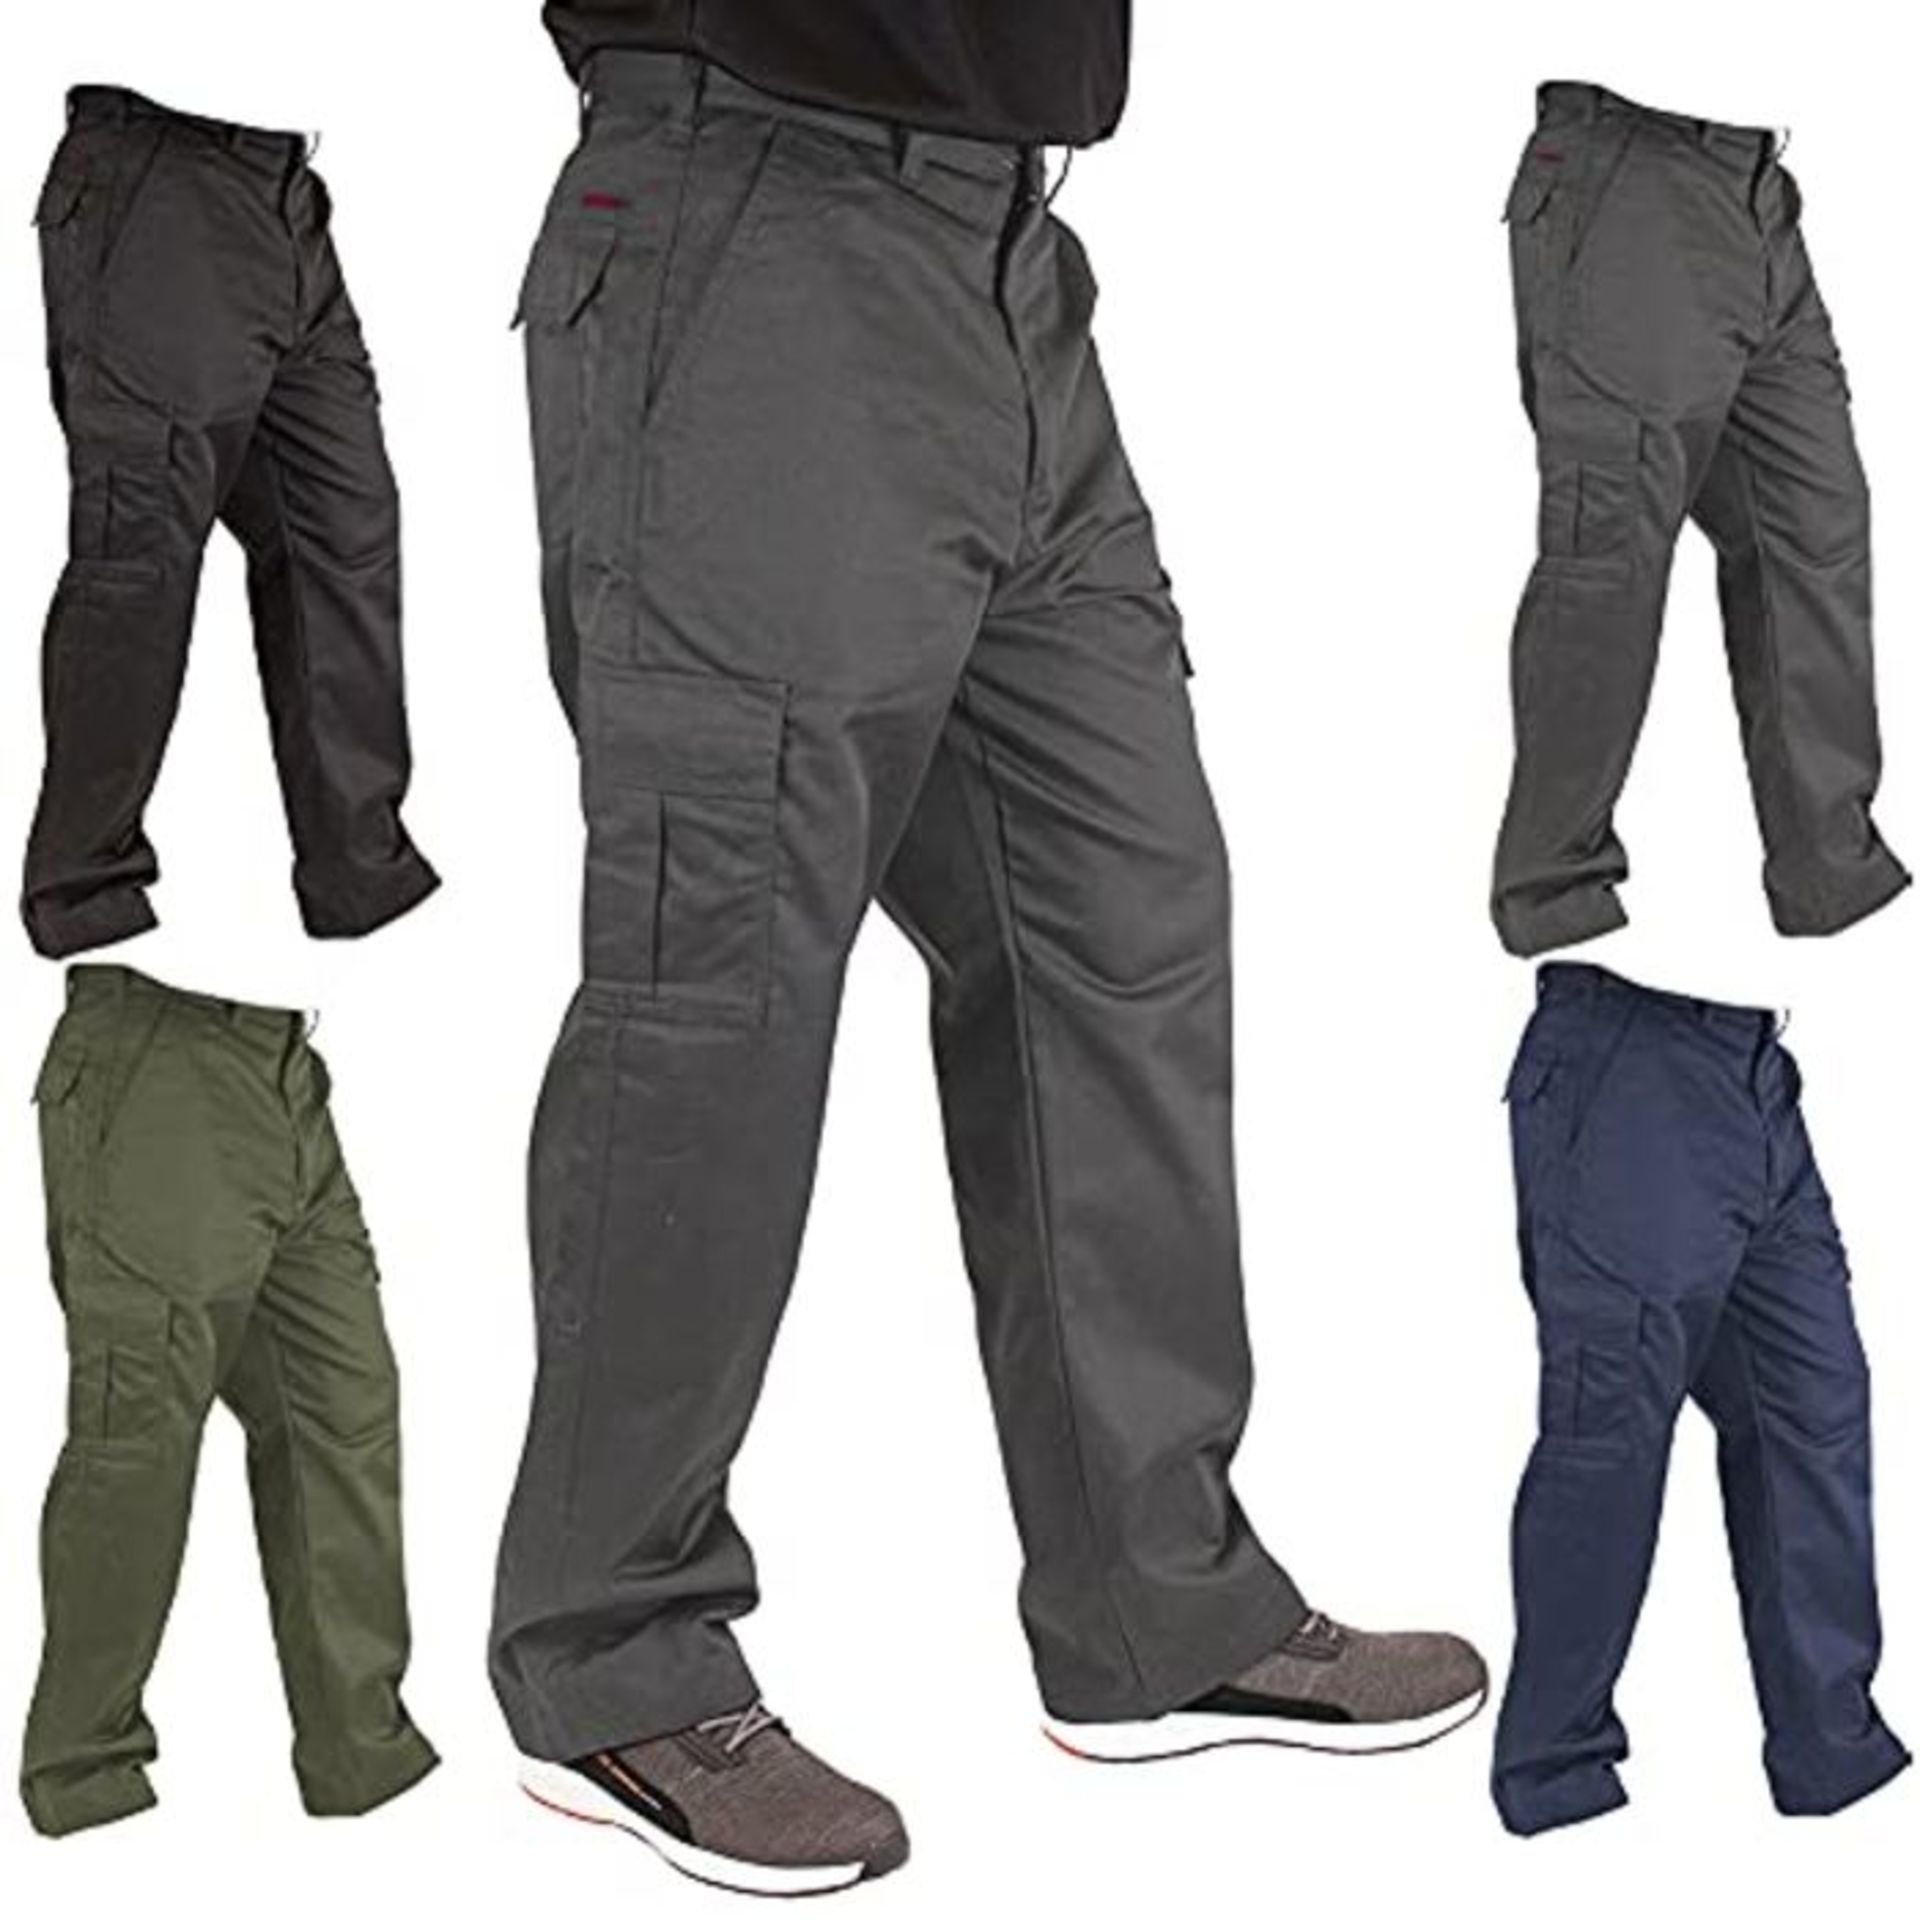 Lee Cooper Mens Classic Workwear Pant Cargo Trouser, Grey, 40W/29L (Short)